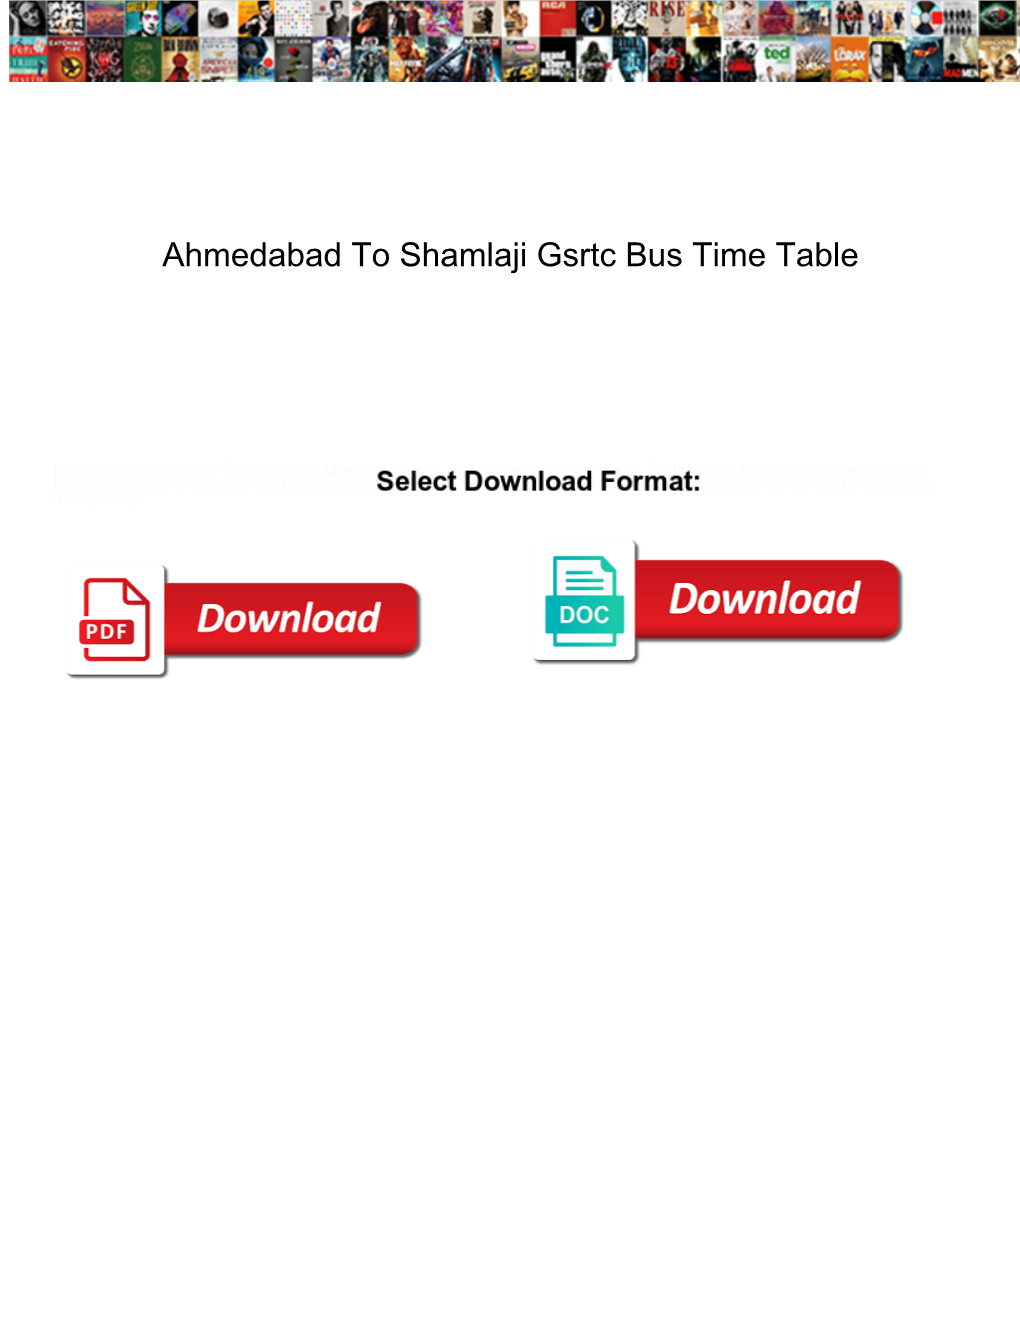 Ahmedabad to Shamlaji Gsrtc Bus Time Table